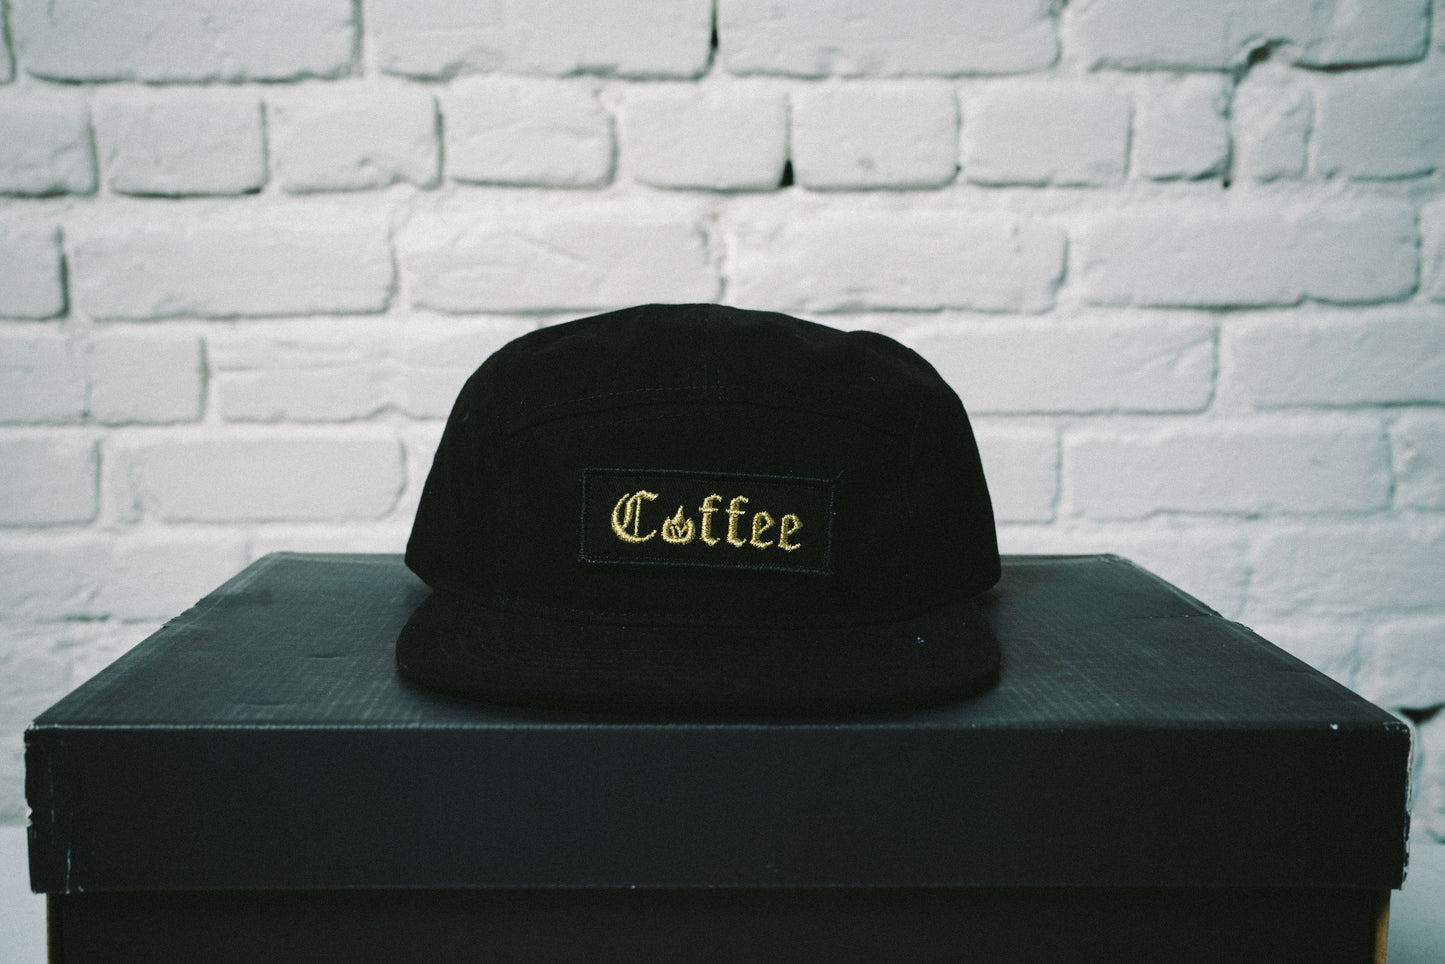 Deadstock 5-Panel Hat ("Coffee" Black Velcro Patch)